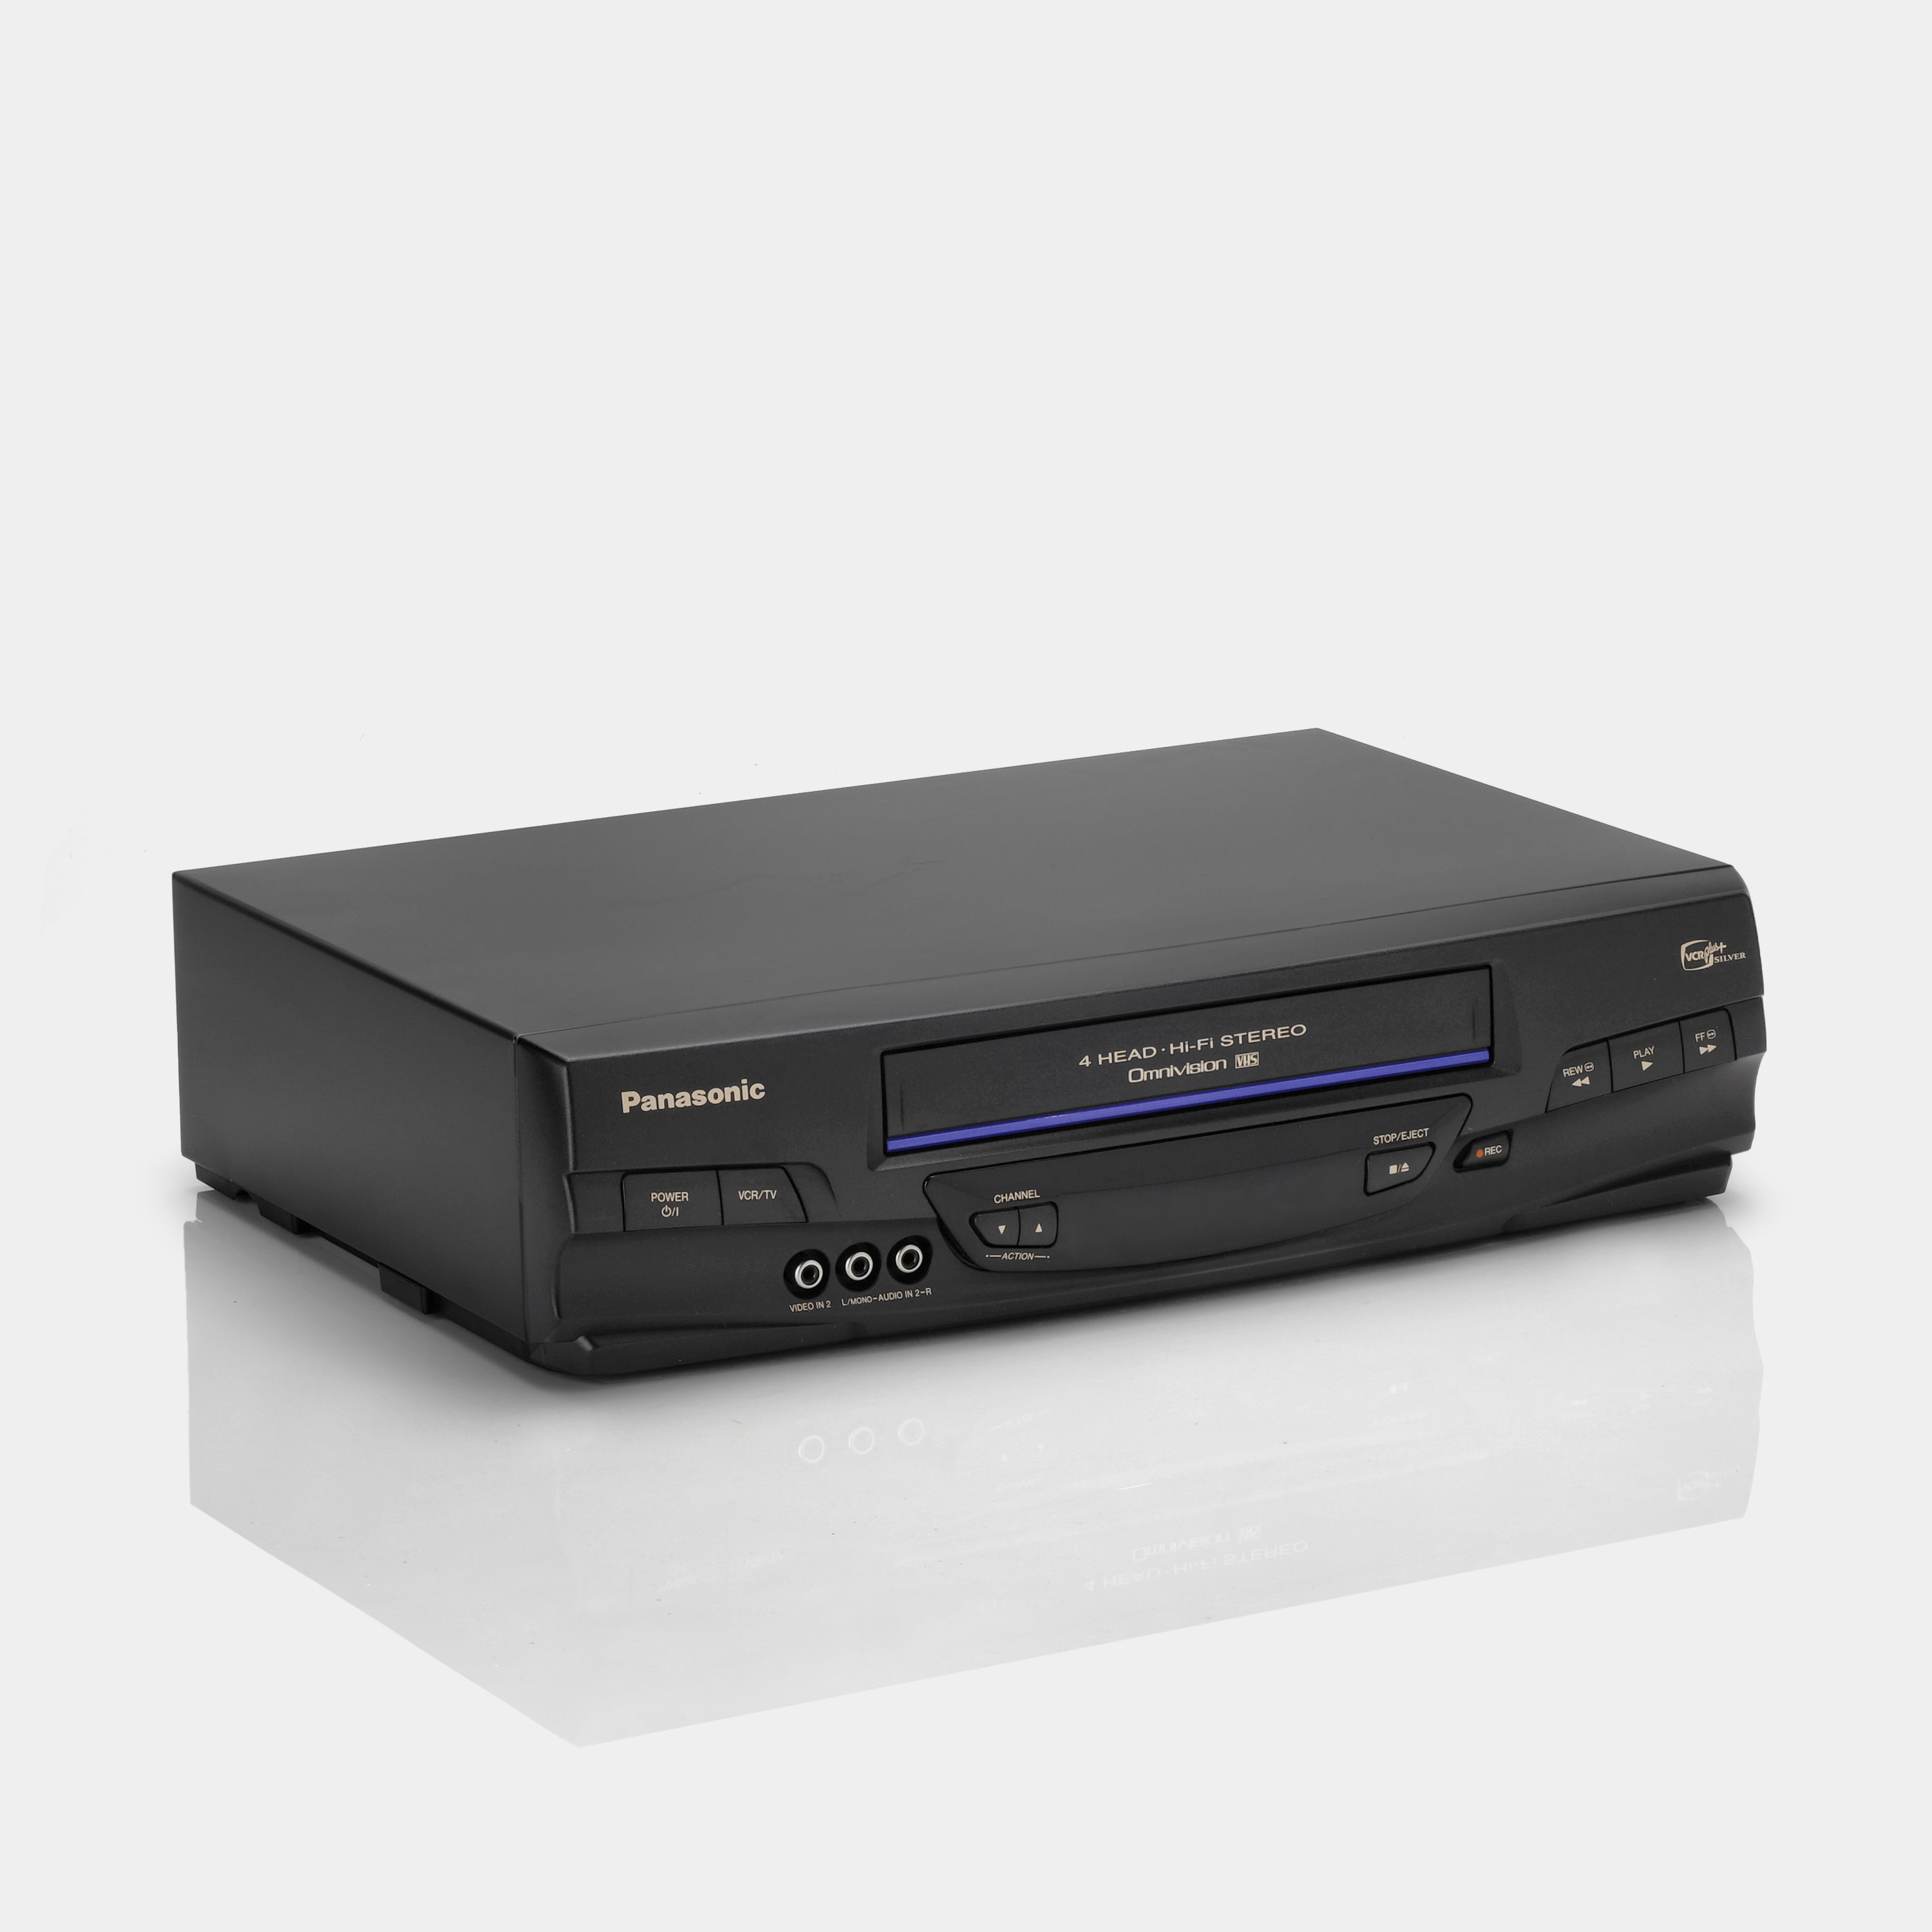 Panasonic Omnivision PV-V4540 VCR VHS Player